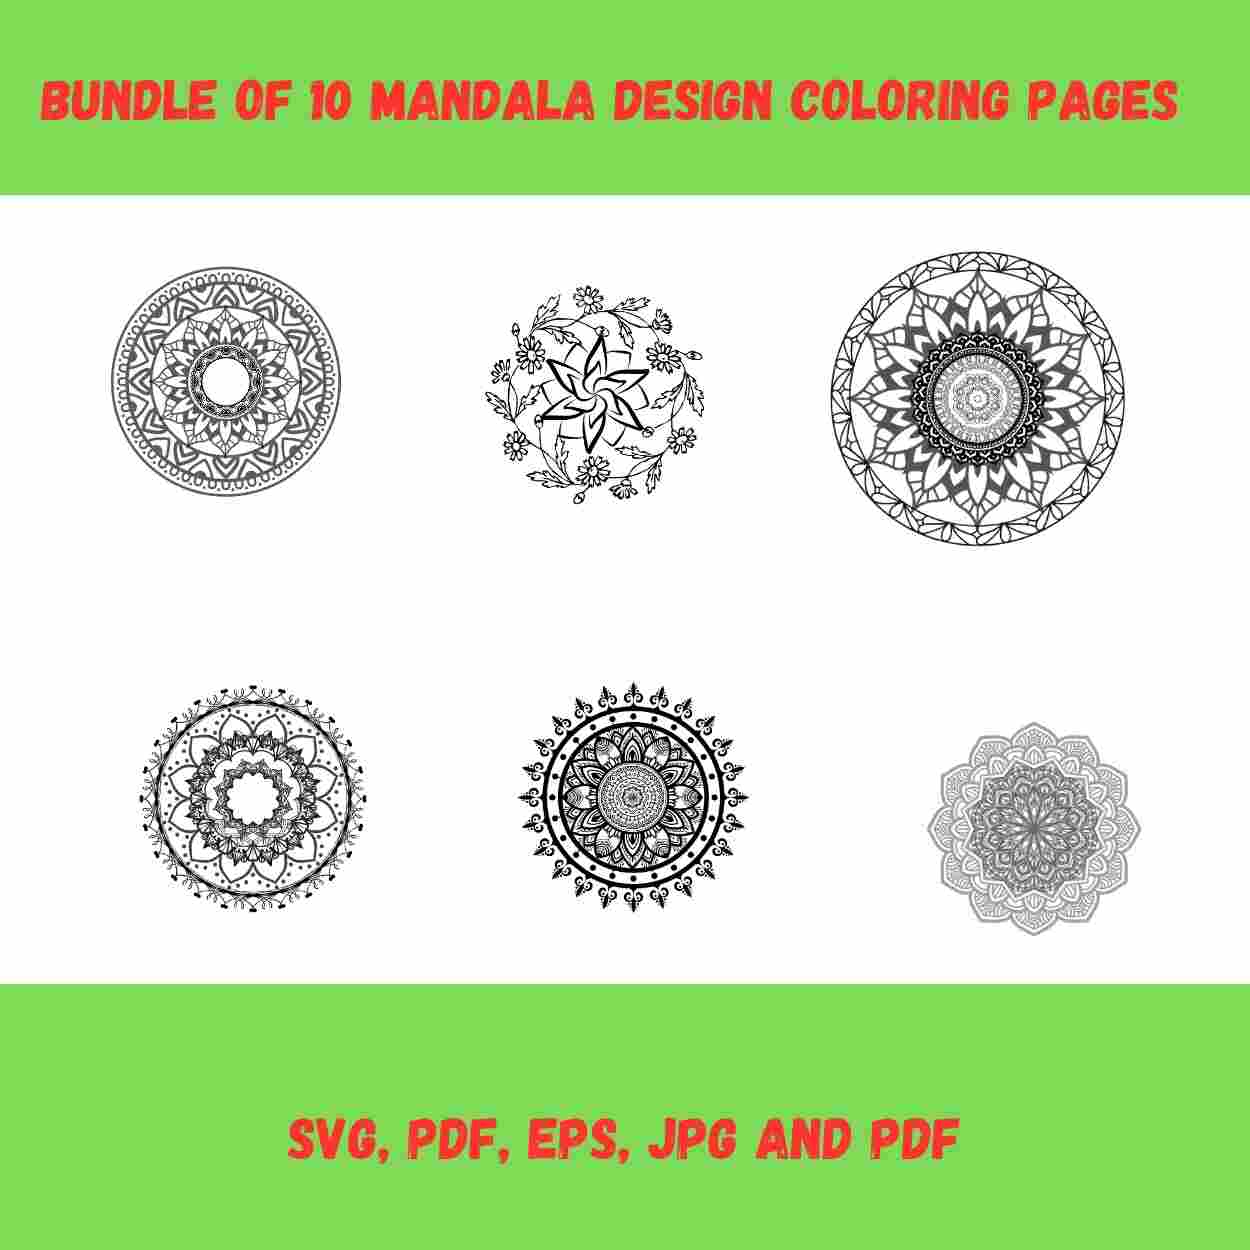 Bundle of 10 Decoration Mandalas Coloring Book Page cover image.